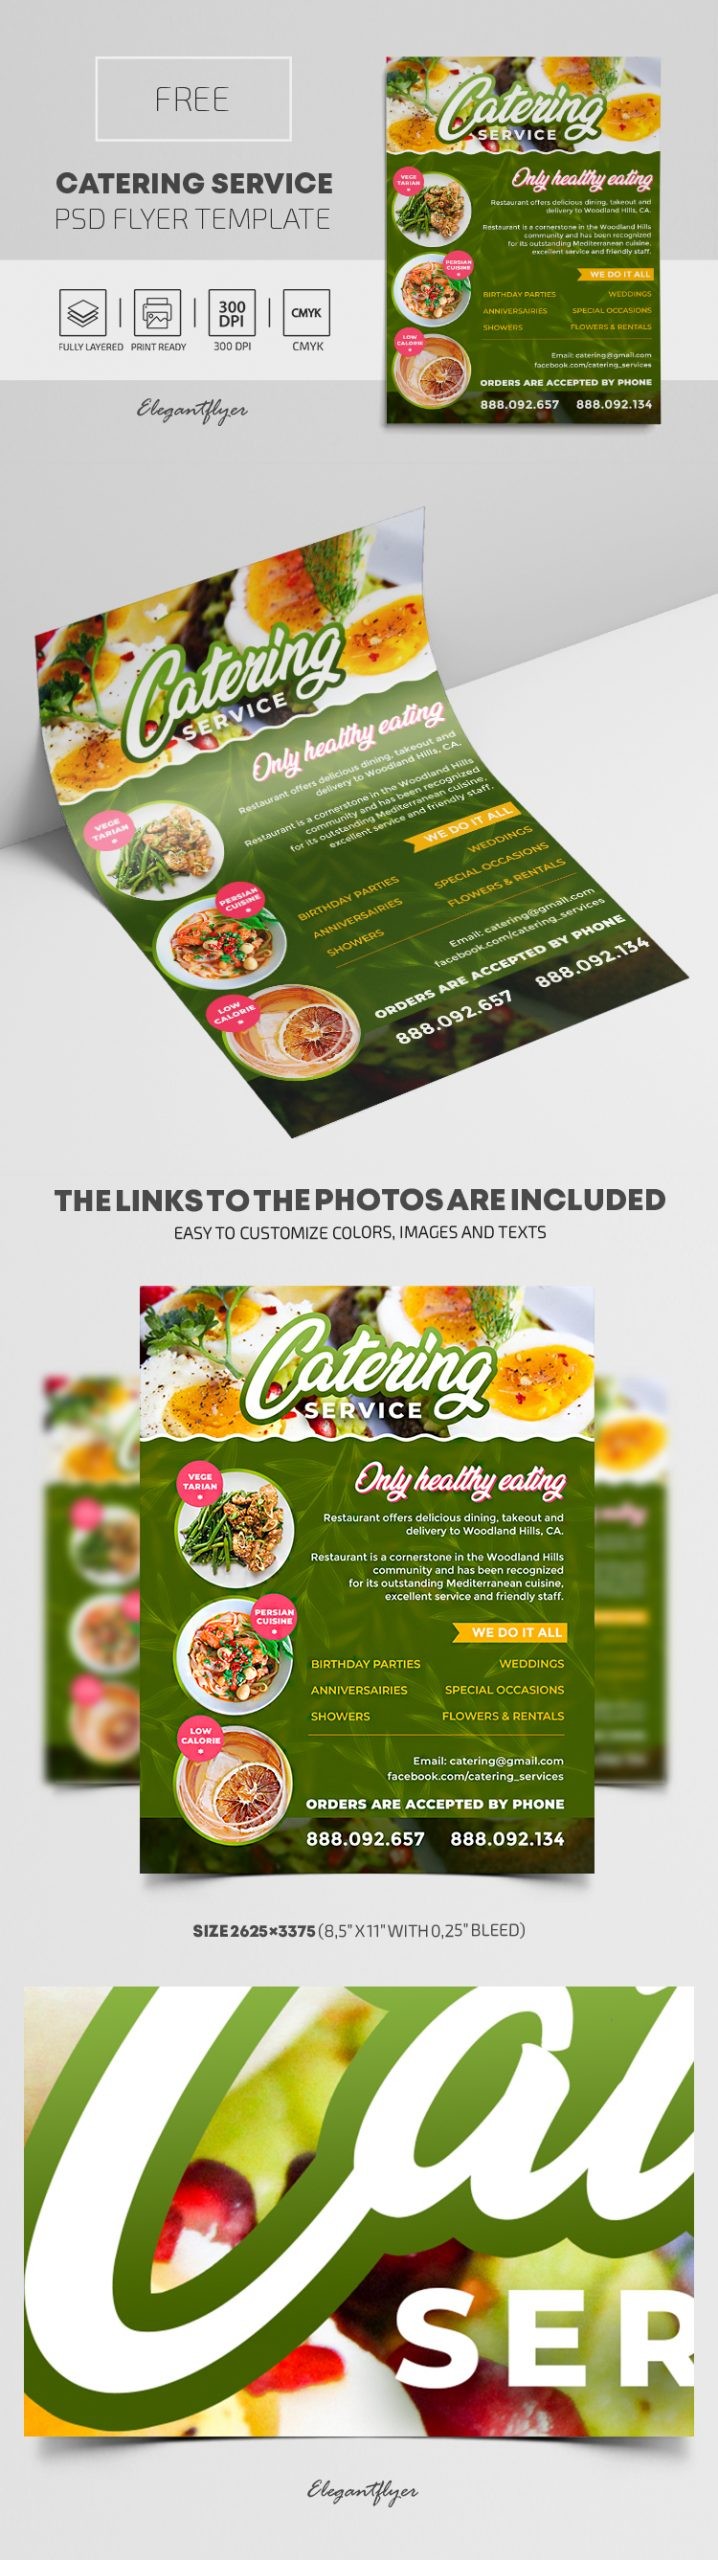 Catering Services Flyer by ElegantFlyer